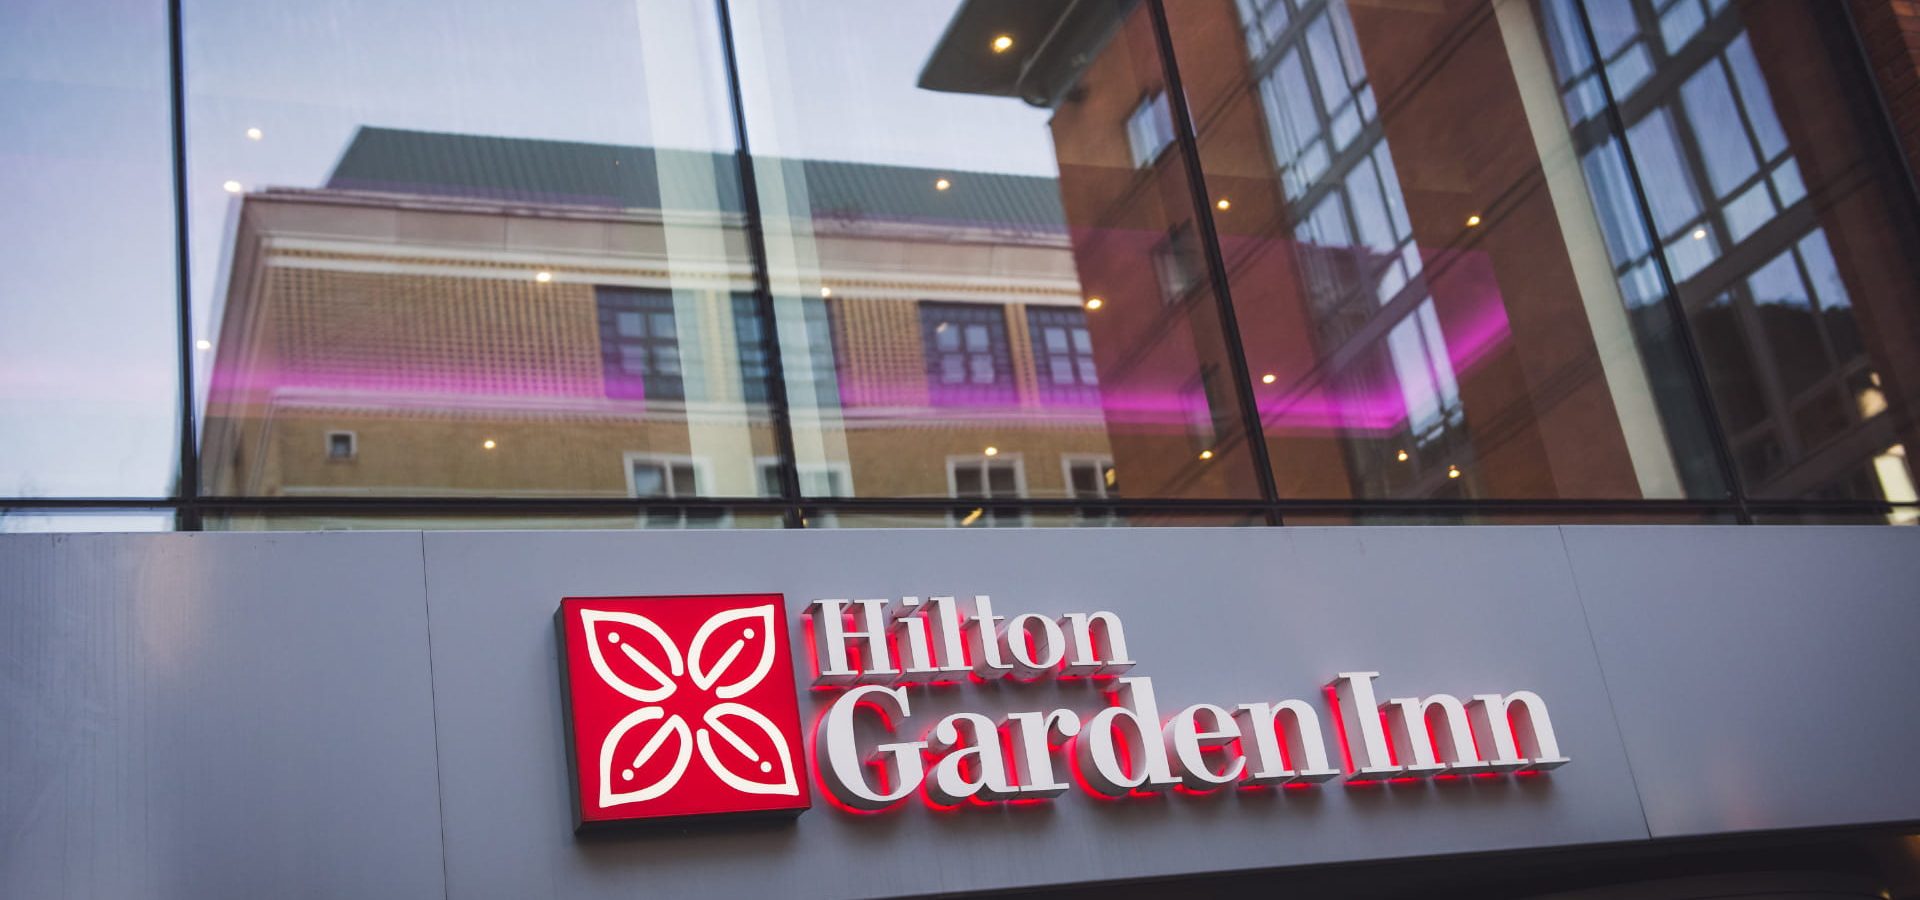 Exterior shot of signage at Hilton Garden Inn Birmingham.